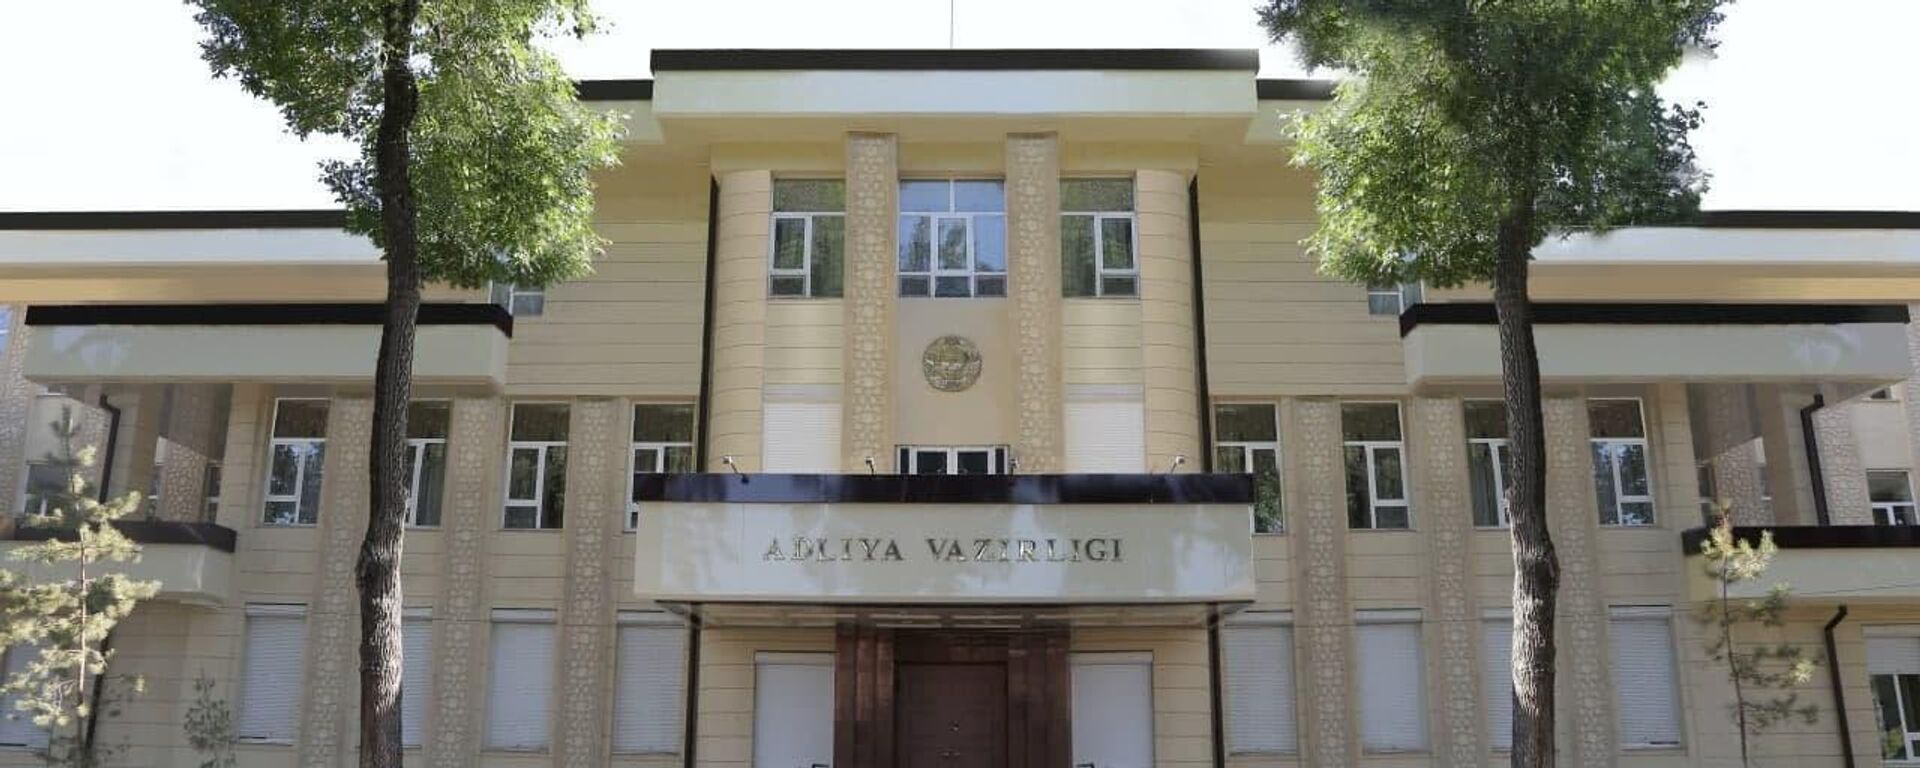 Здание Министерства Юстиции Узбекистана - новое  - Sputnik Узбекистан, 1920, 30.06.2021